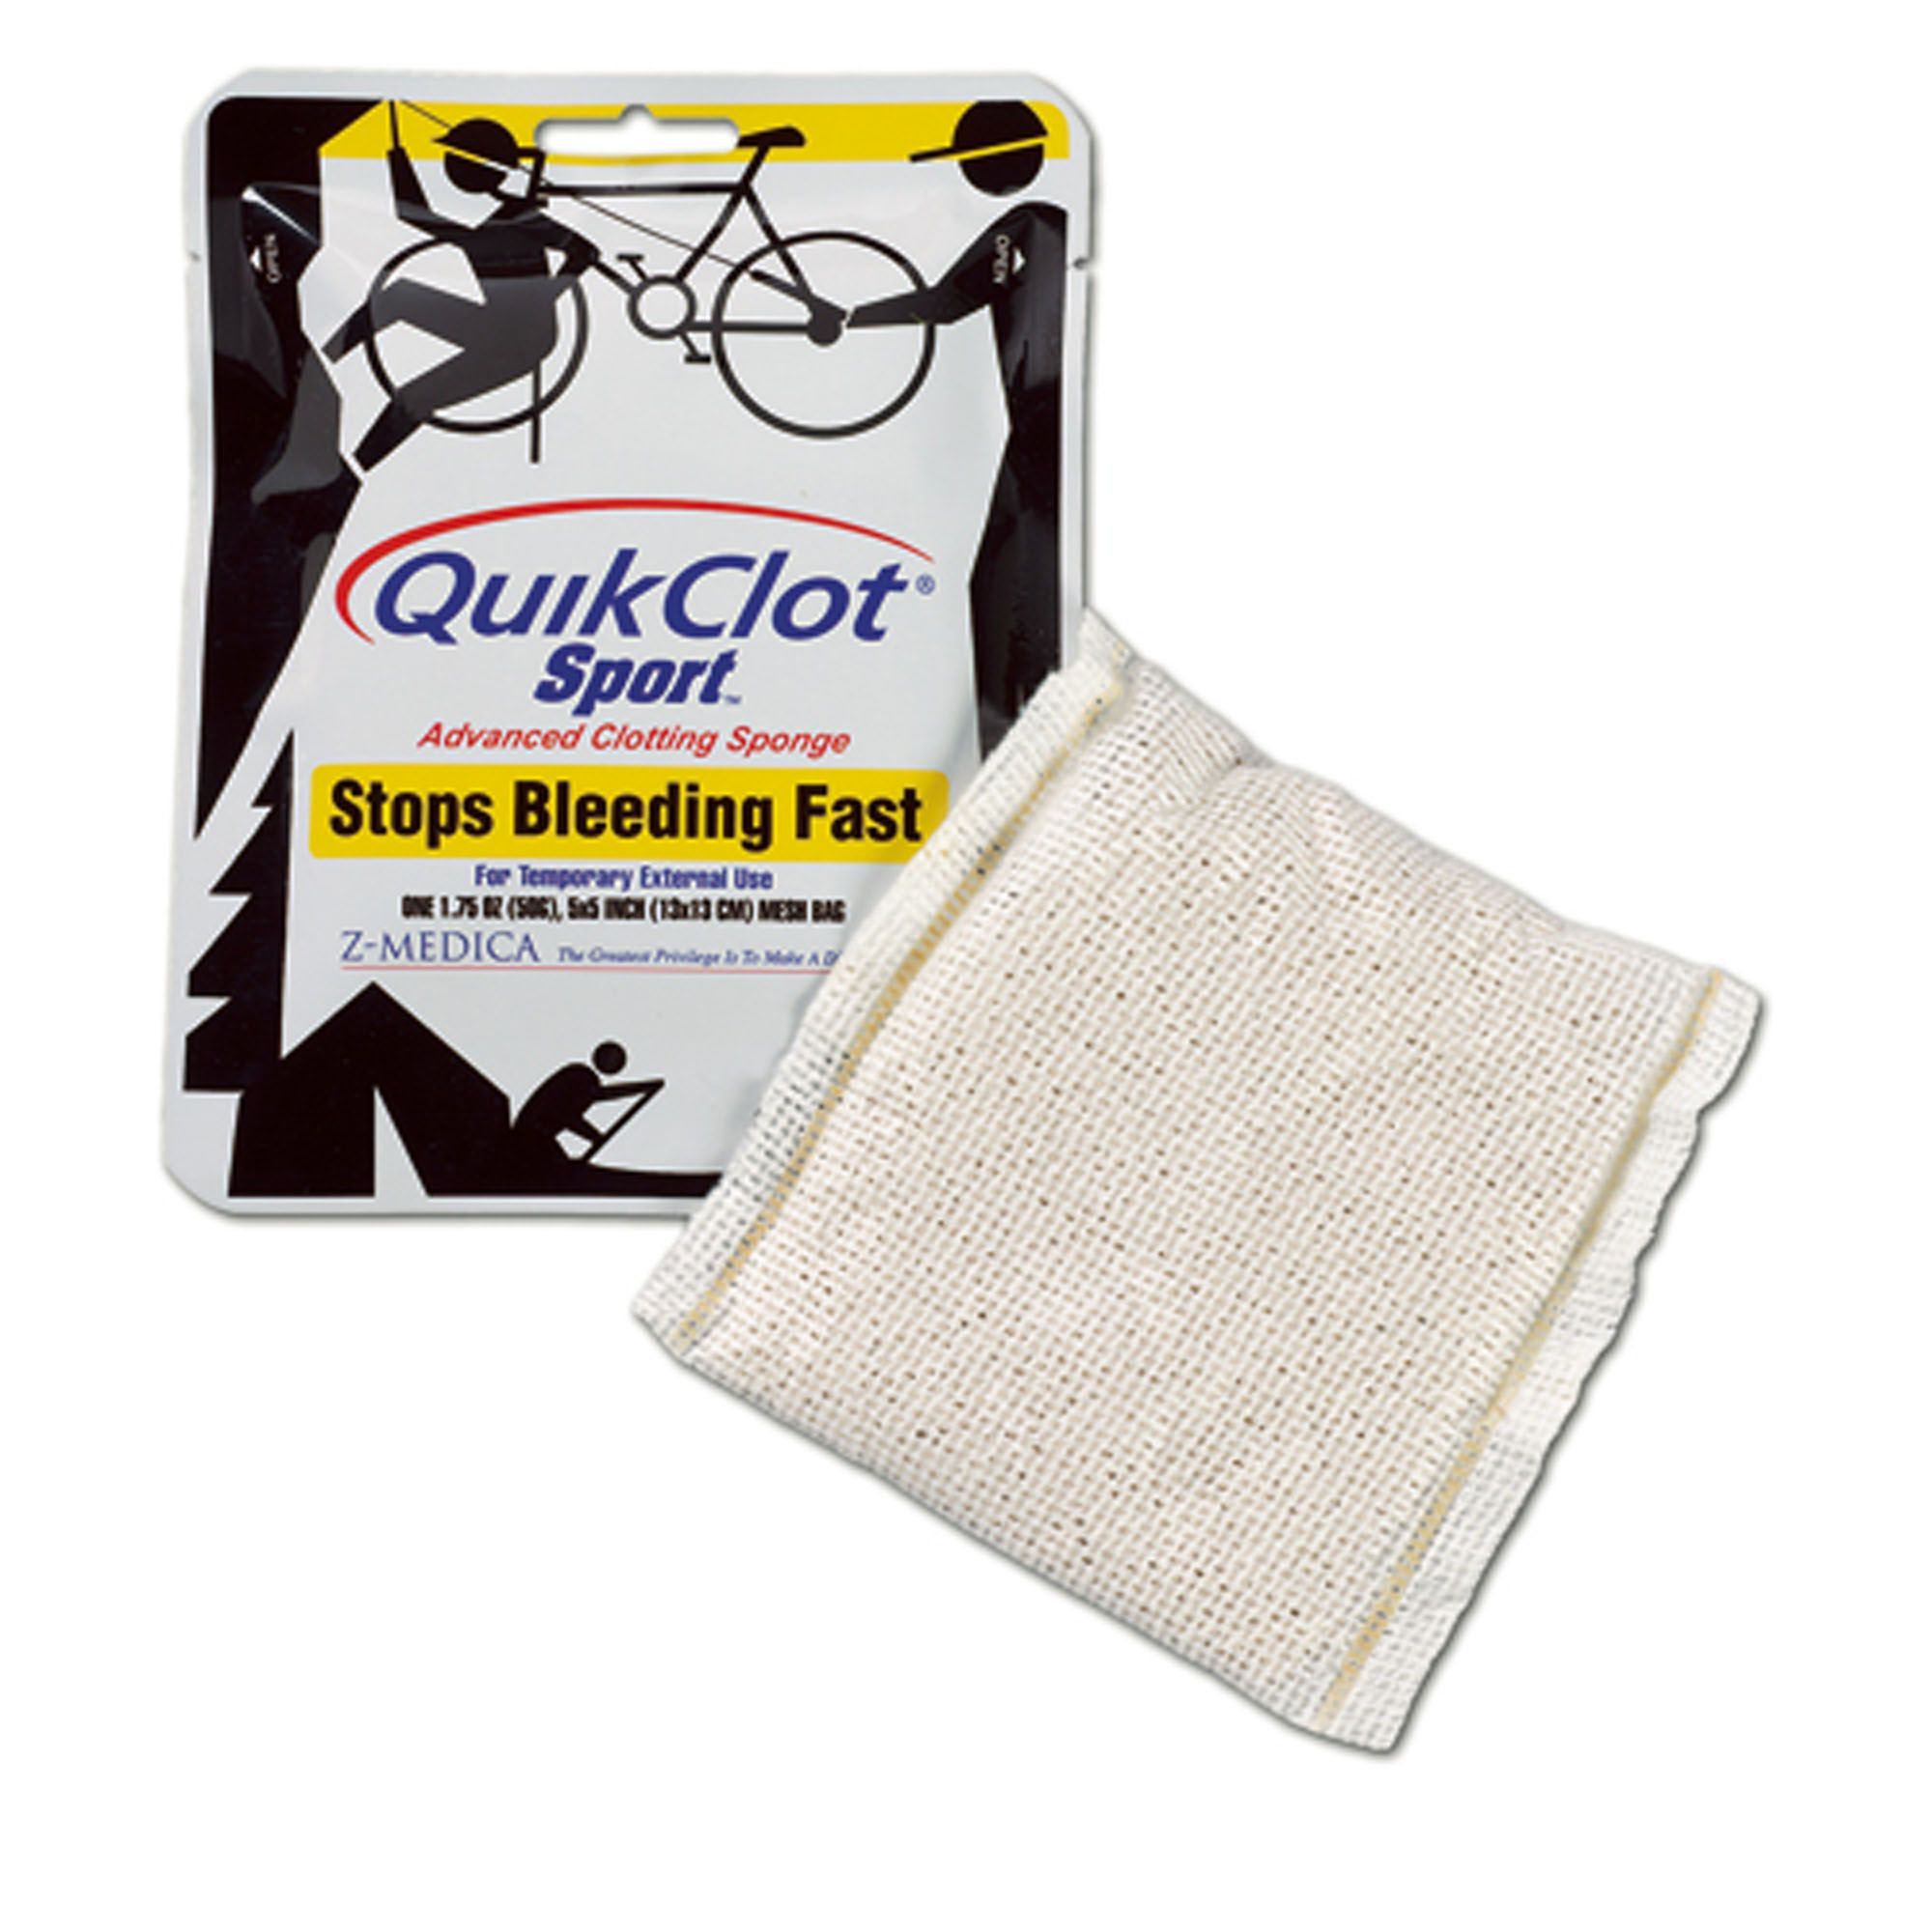 QuikClot Sport 50g Quick Clot Stops Bleeding Fast! 